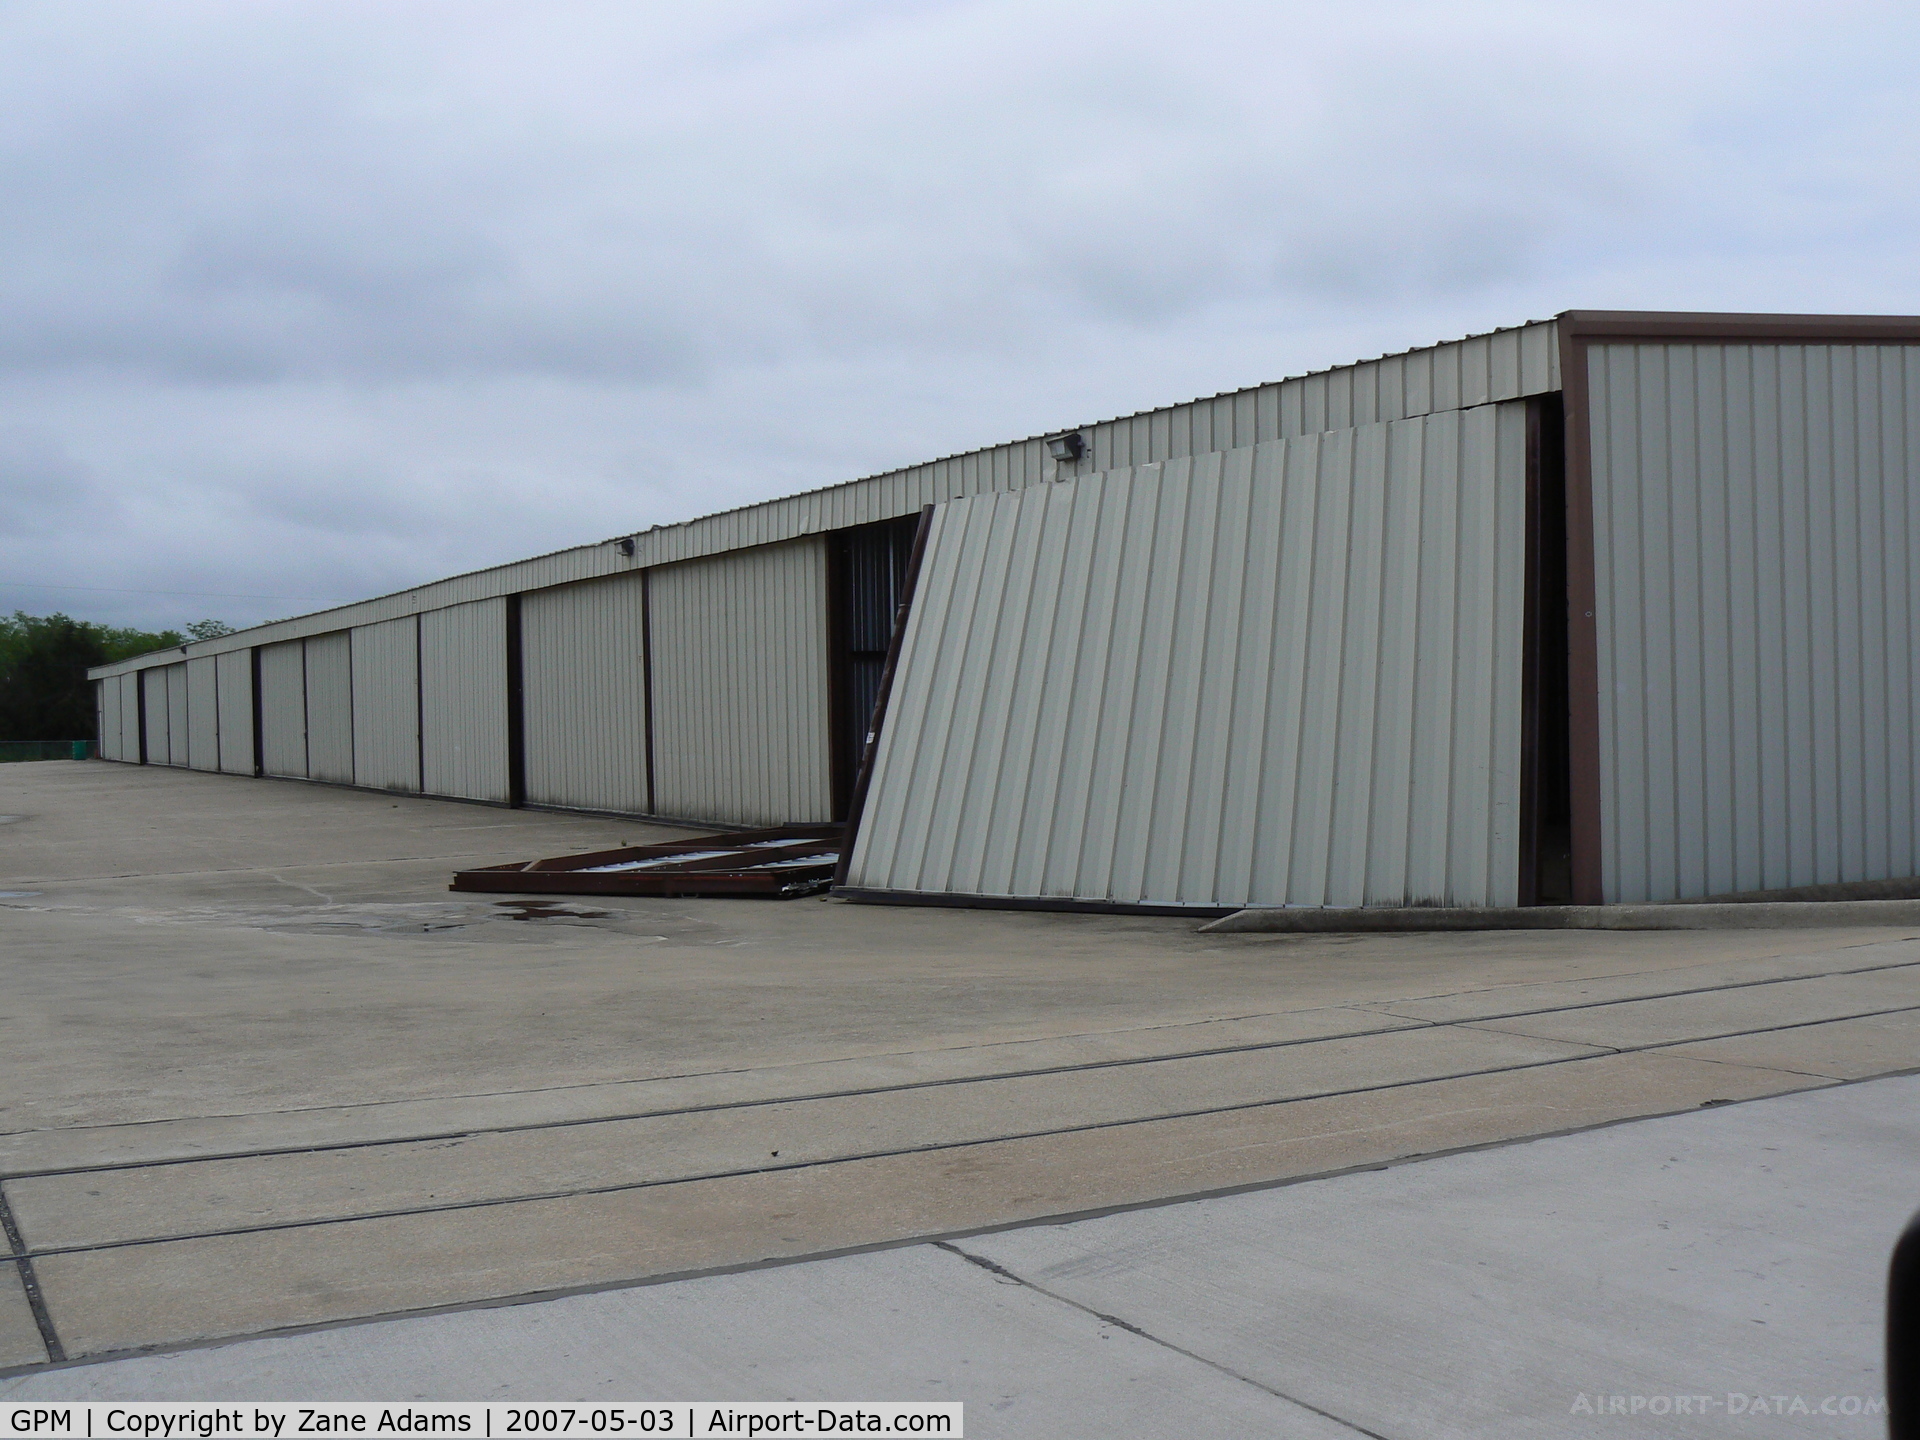 Grand Prairie Municipal Airport (GPM) Photo